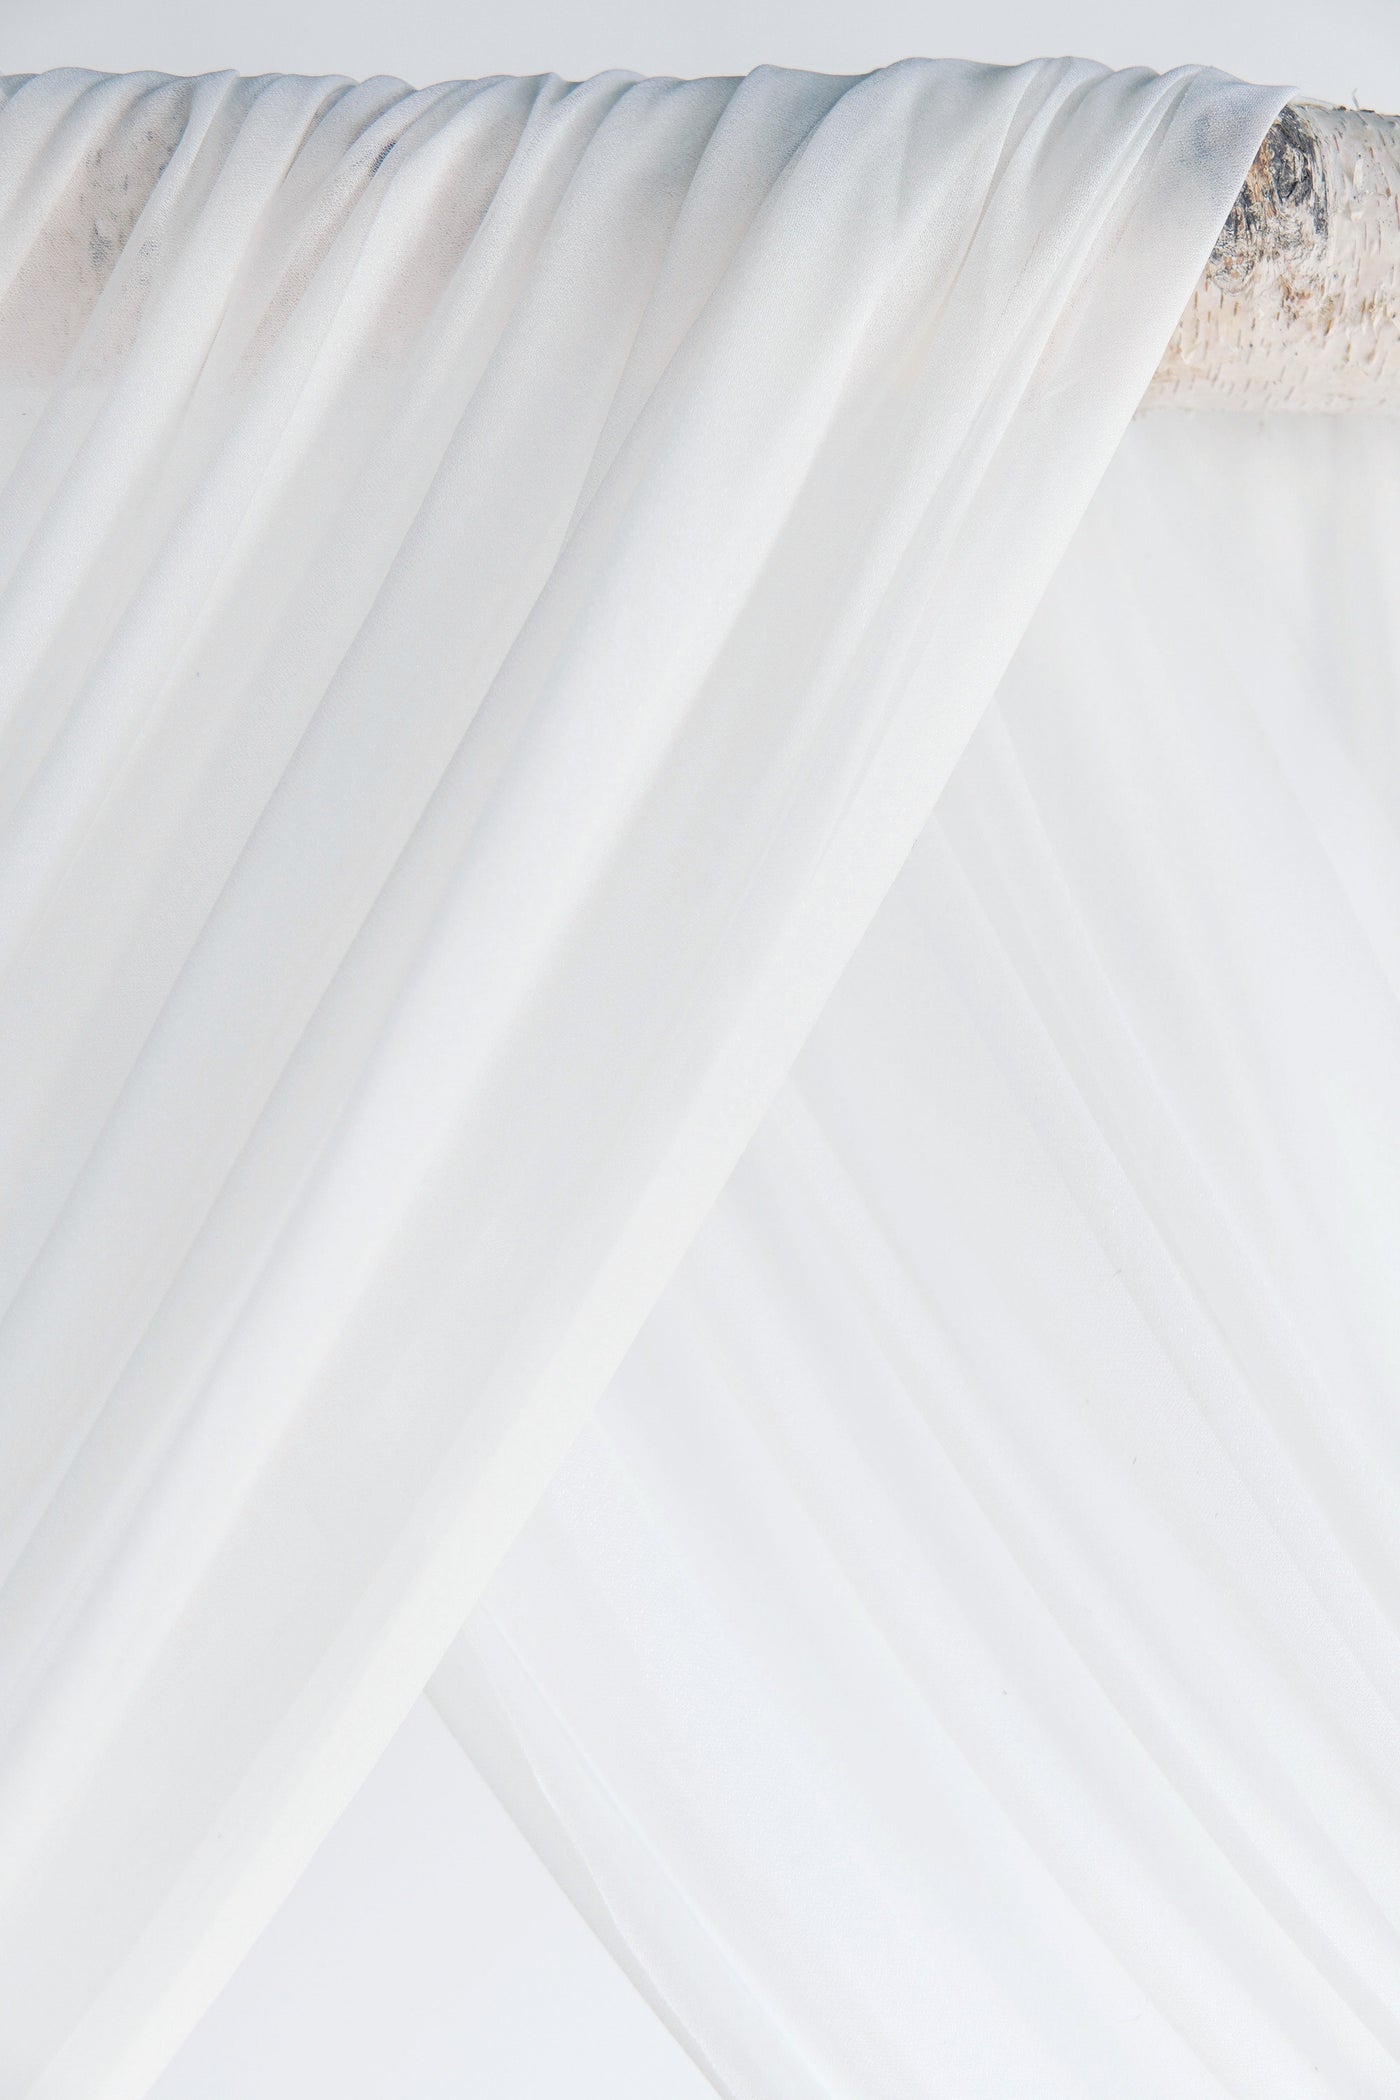 2 Pcs Rustic Wedding Arch Draping 29"w x 19.7ft - Graceful White